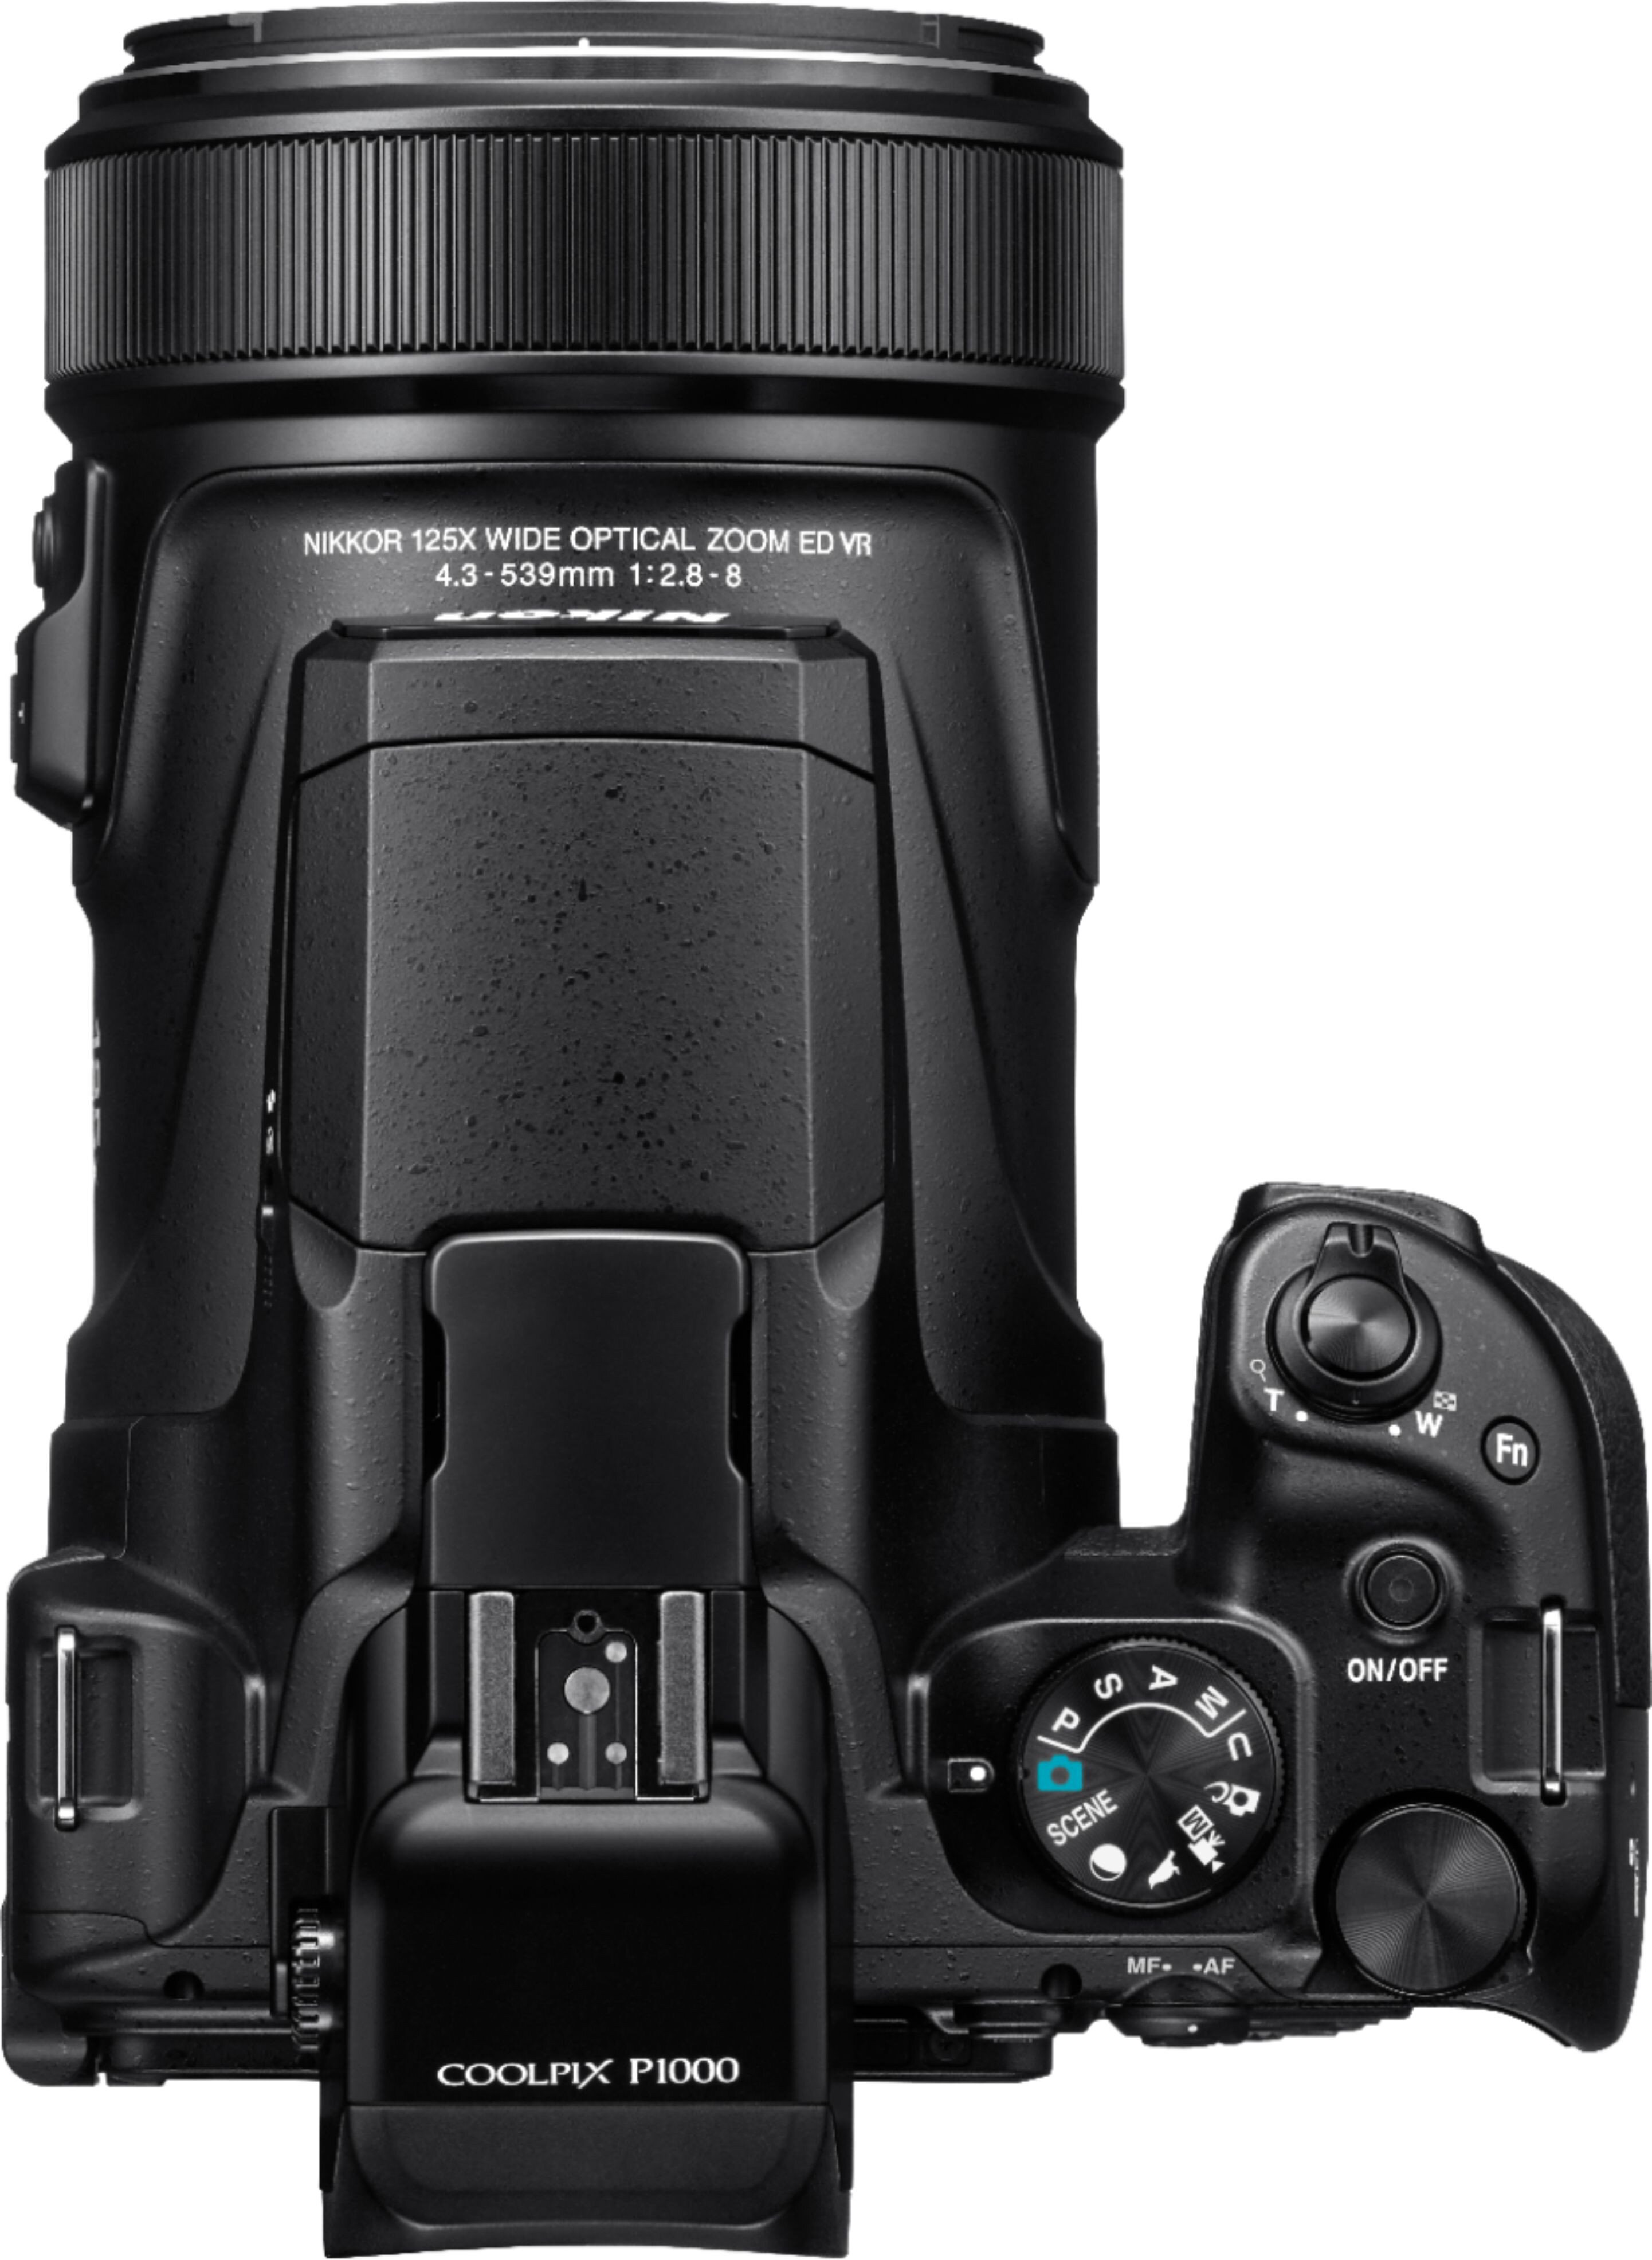 Buy Nikon COOLPIX P1000 Compact Digital Camera online in Pakistan - Tejar.pk